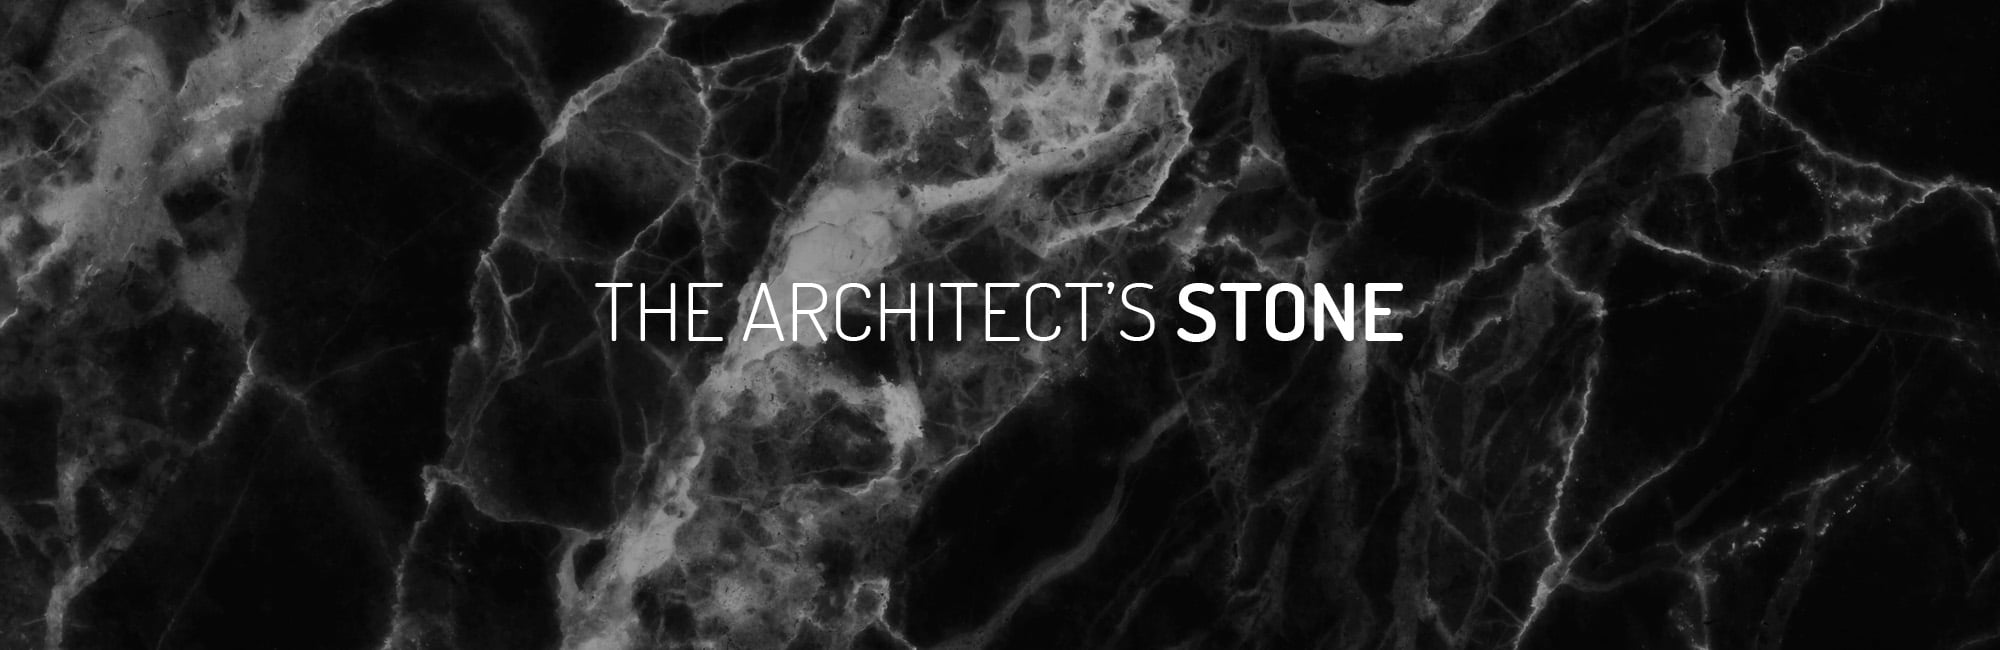 The Architect’s Stone